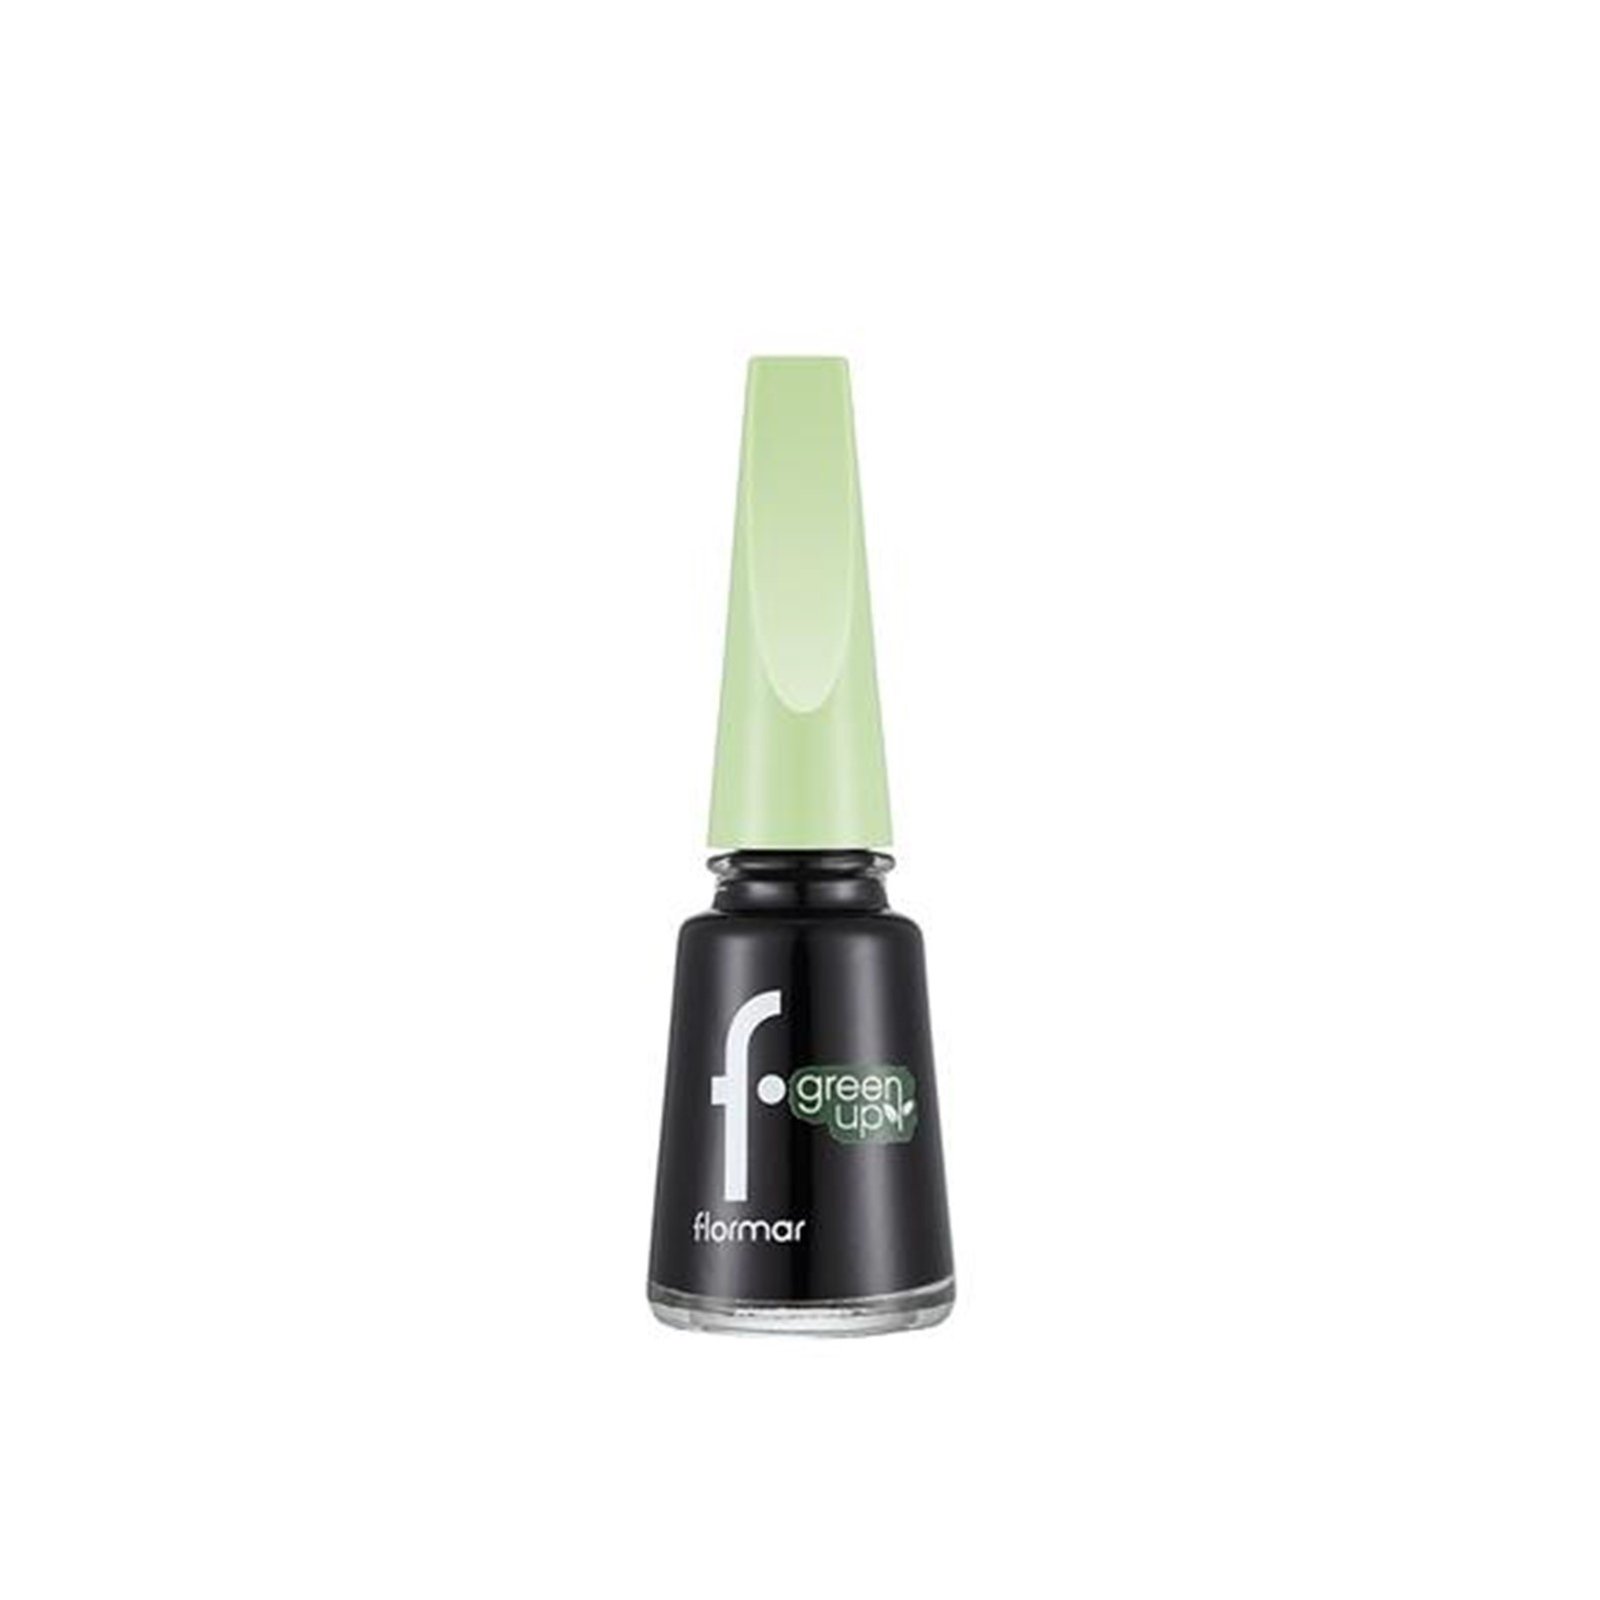 Flormar Green Up Nail Enamel 015 Blackest Black 11ml (0.37 fl oz)